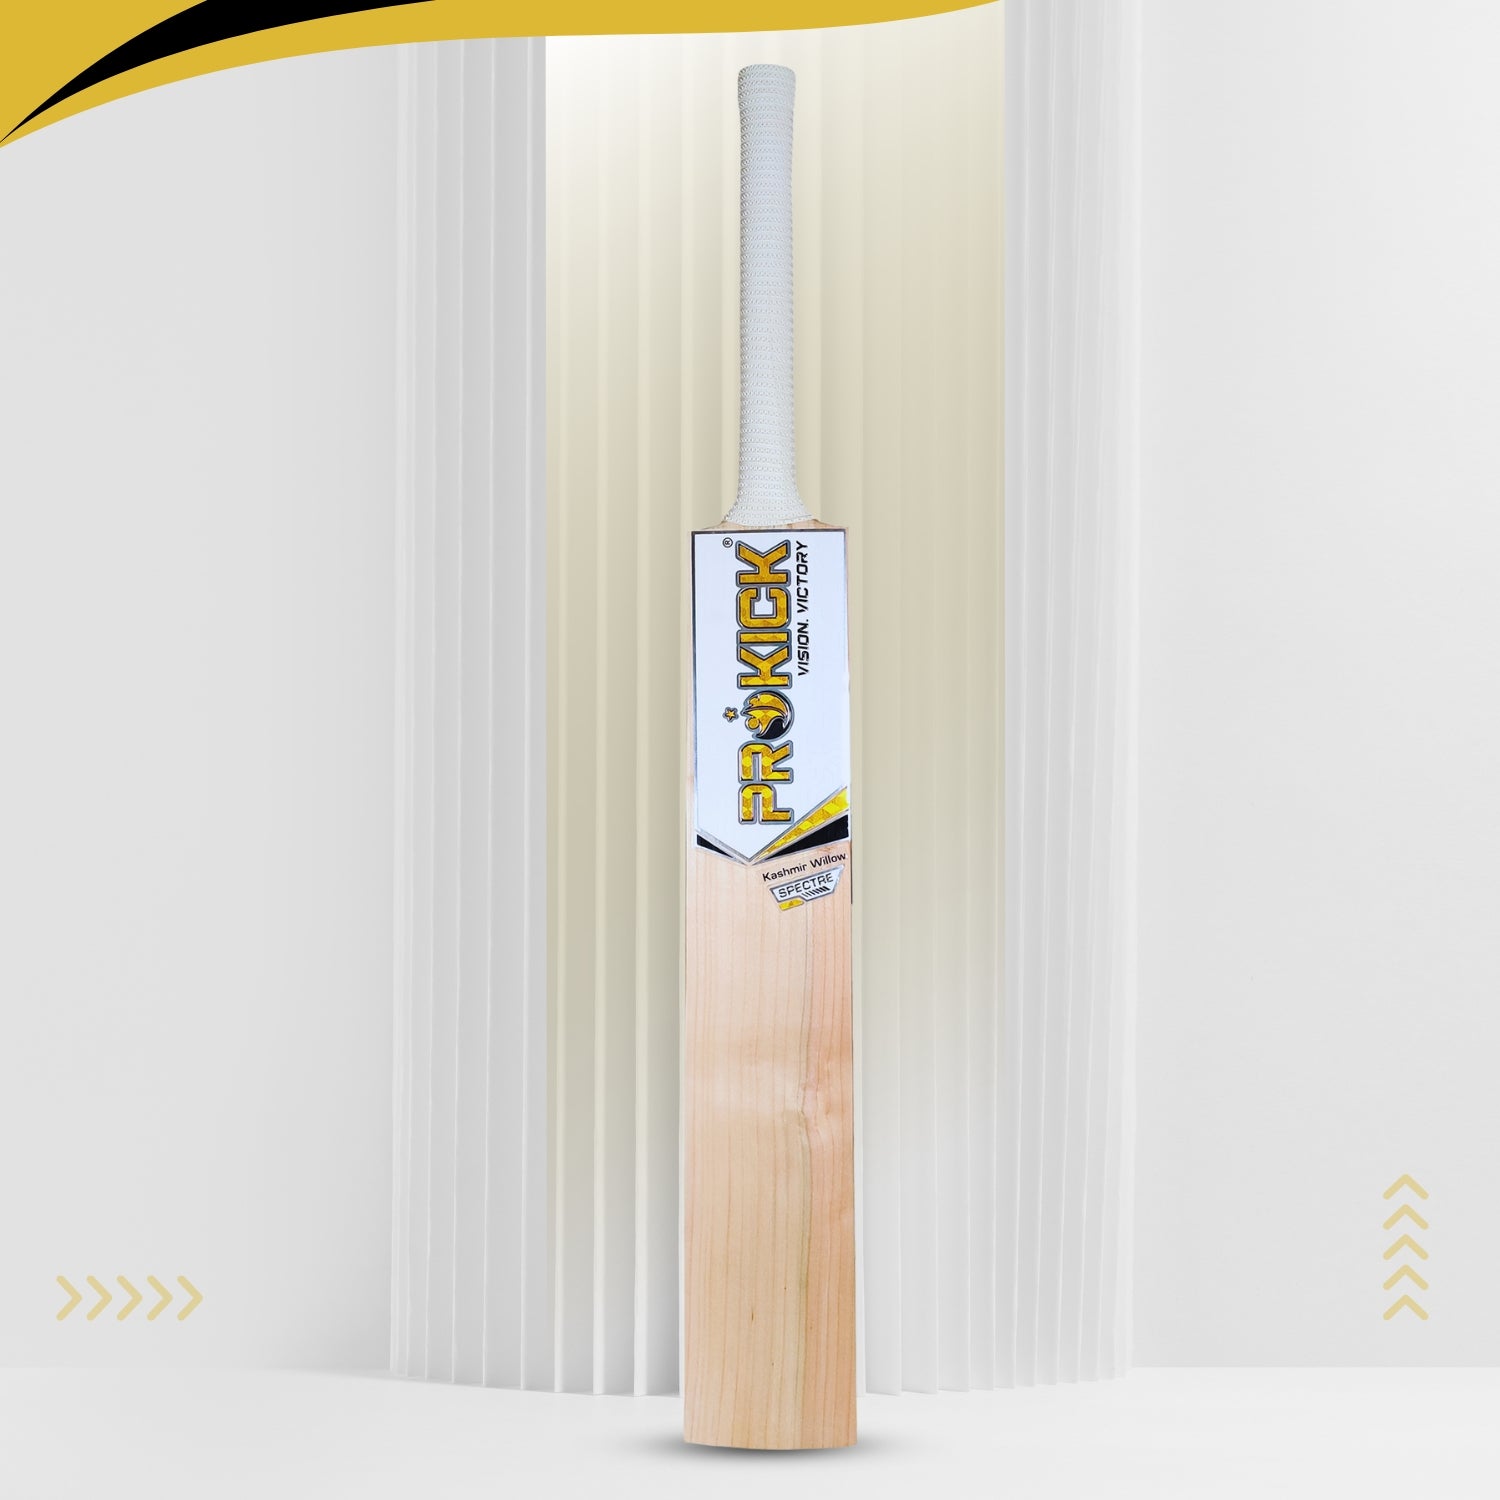 Prokick Spectre Kashmir Willow Cricket Bat - Best Price online Prokicksports.com